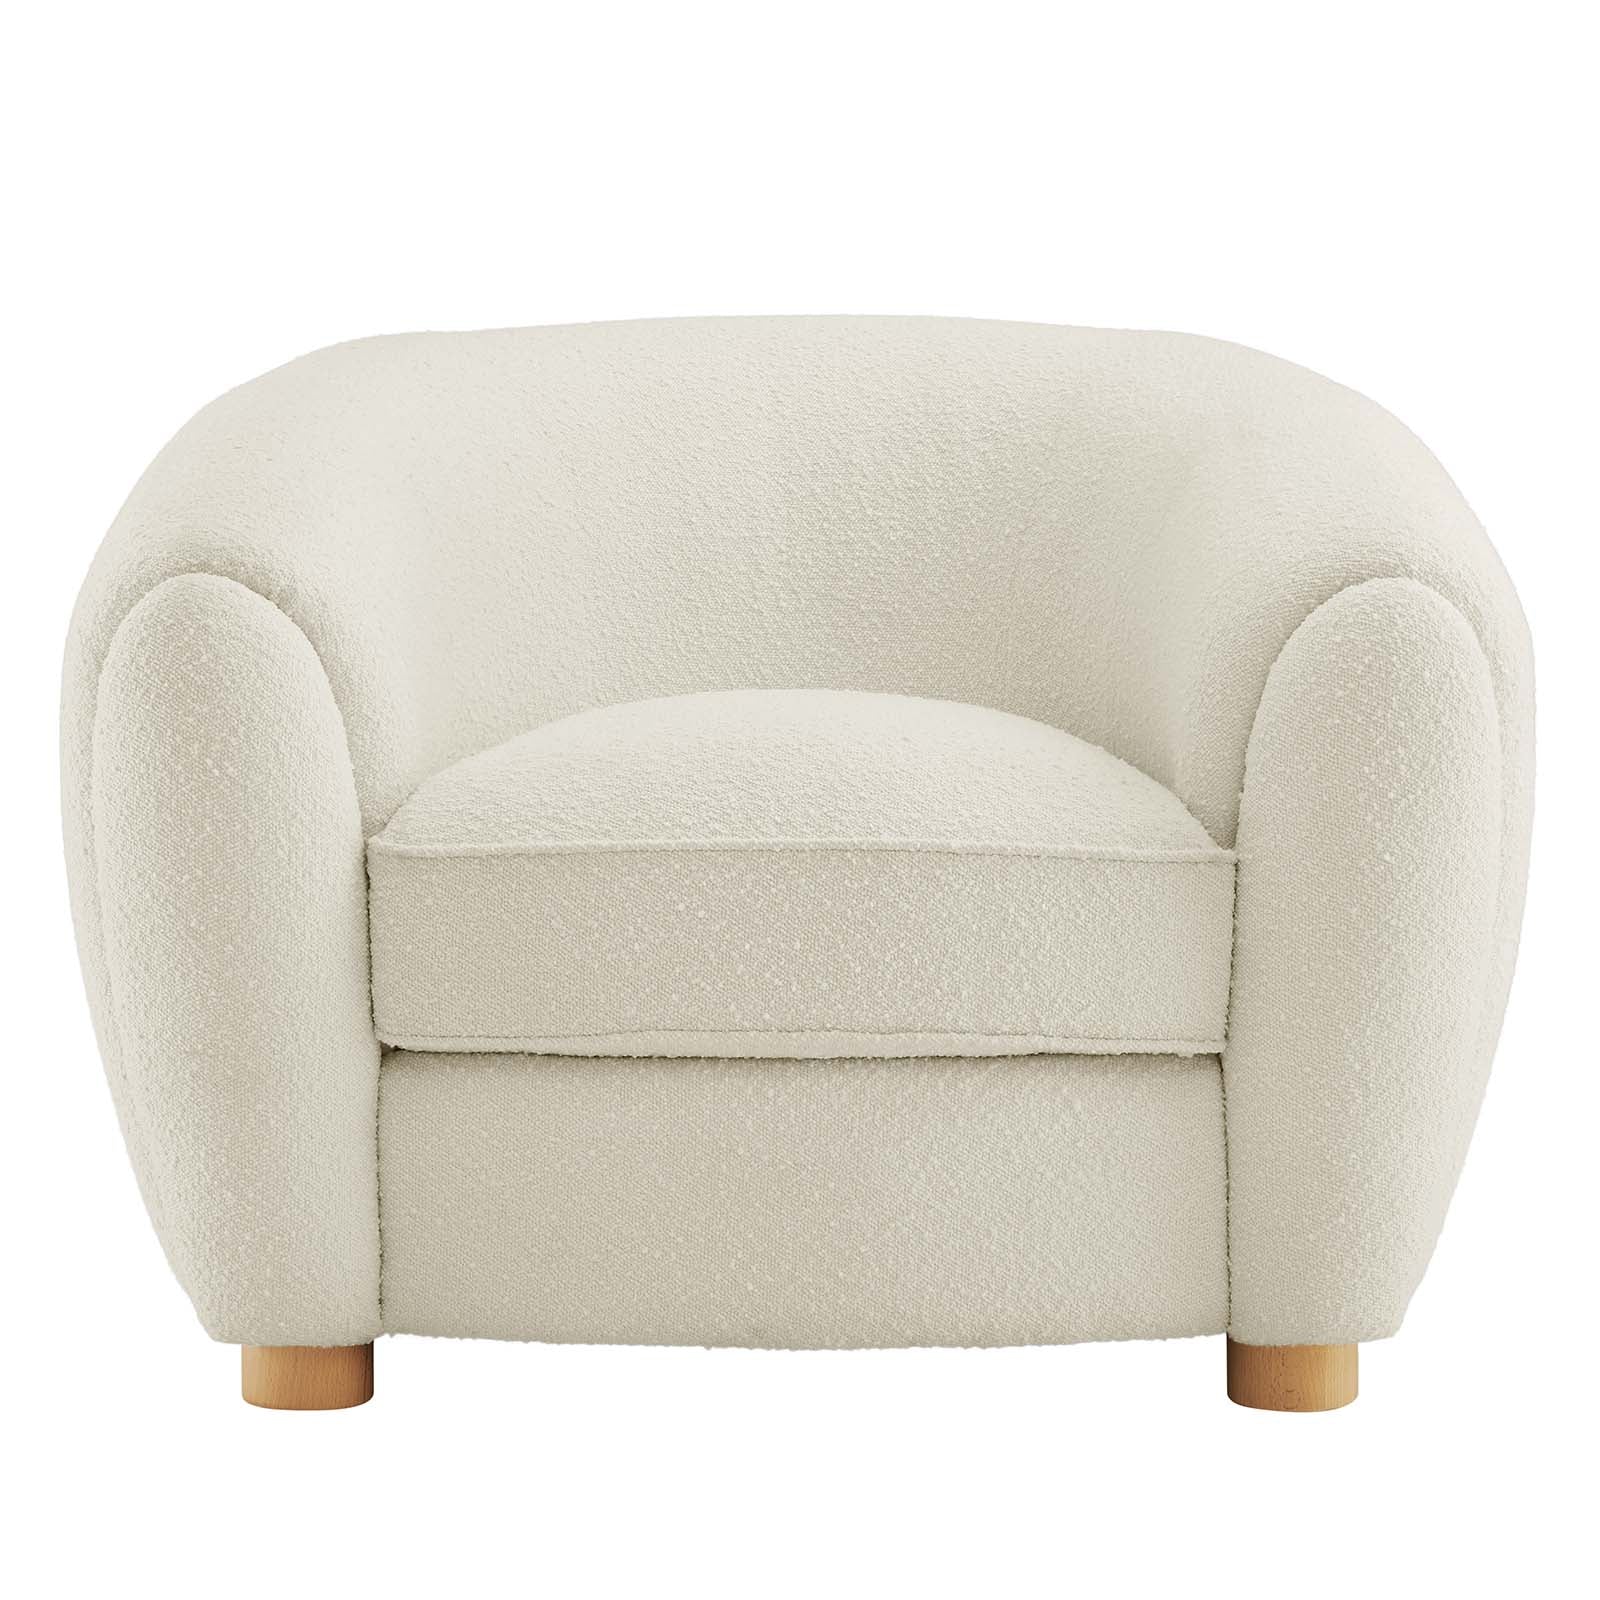 Abundant Boucle Upholstered Fabric Armchair - East Shore Modern Home Furnishings